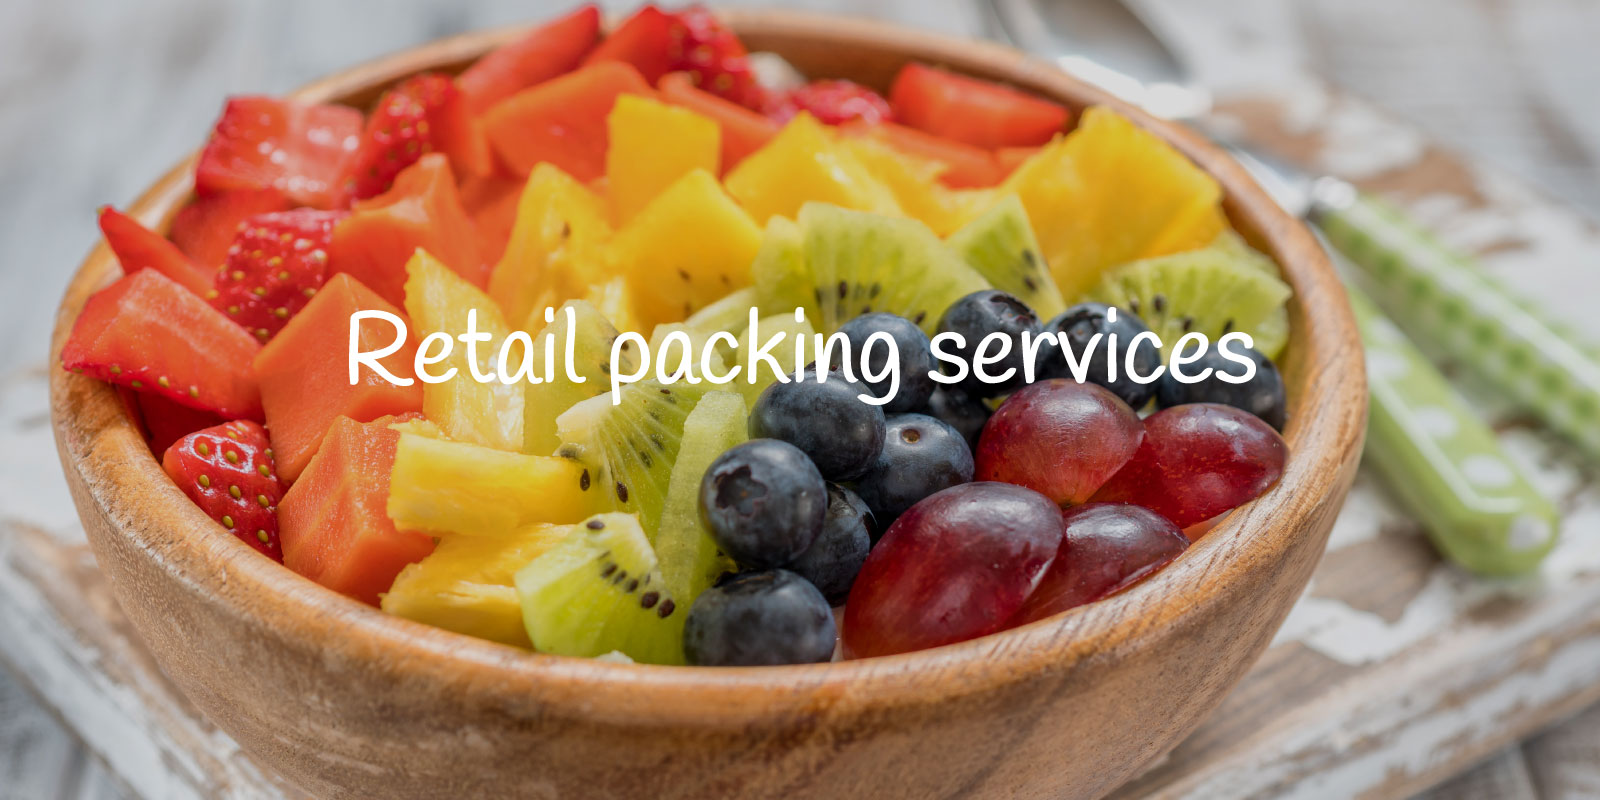 Sanco_Home_Retail-packing-services_Opcion-B